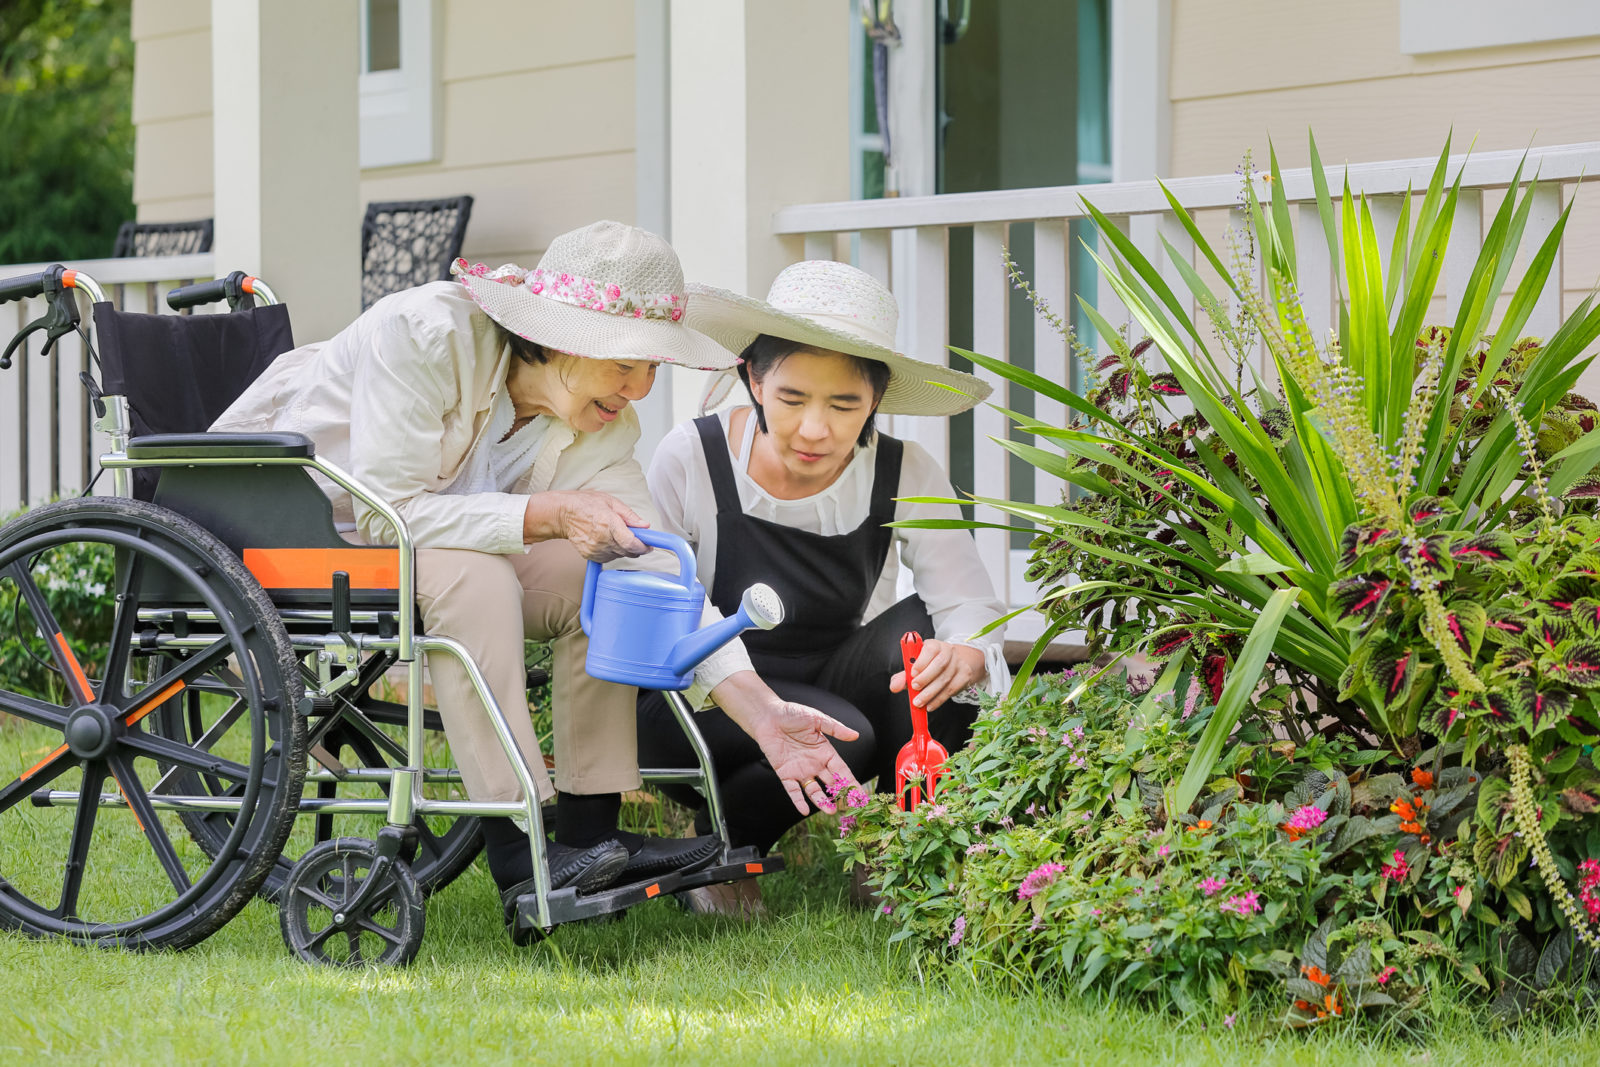 Elderly woman in wheelchair gardening in backyard with daughter